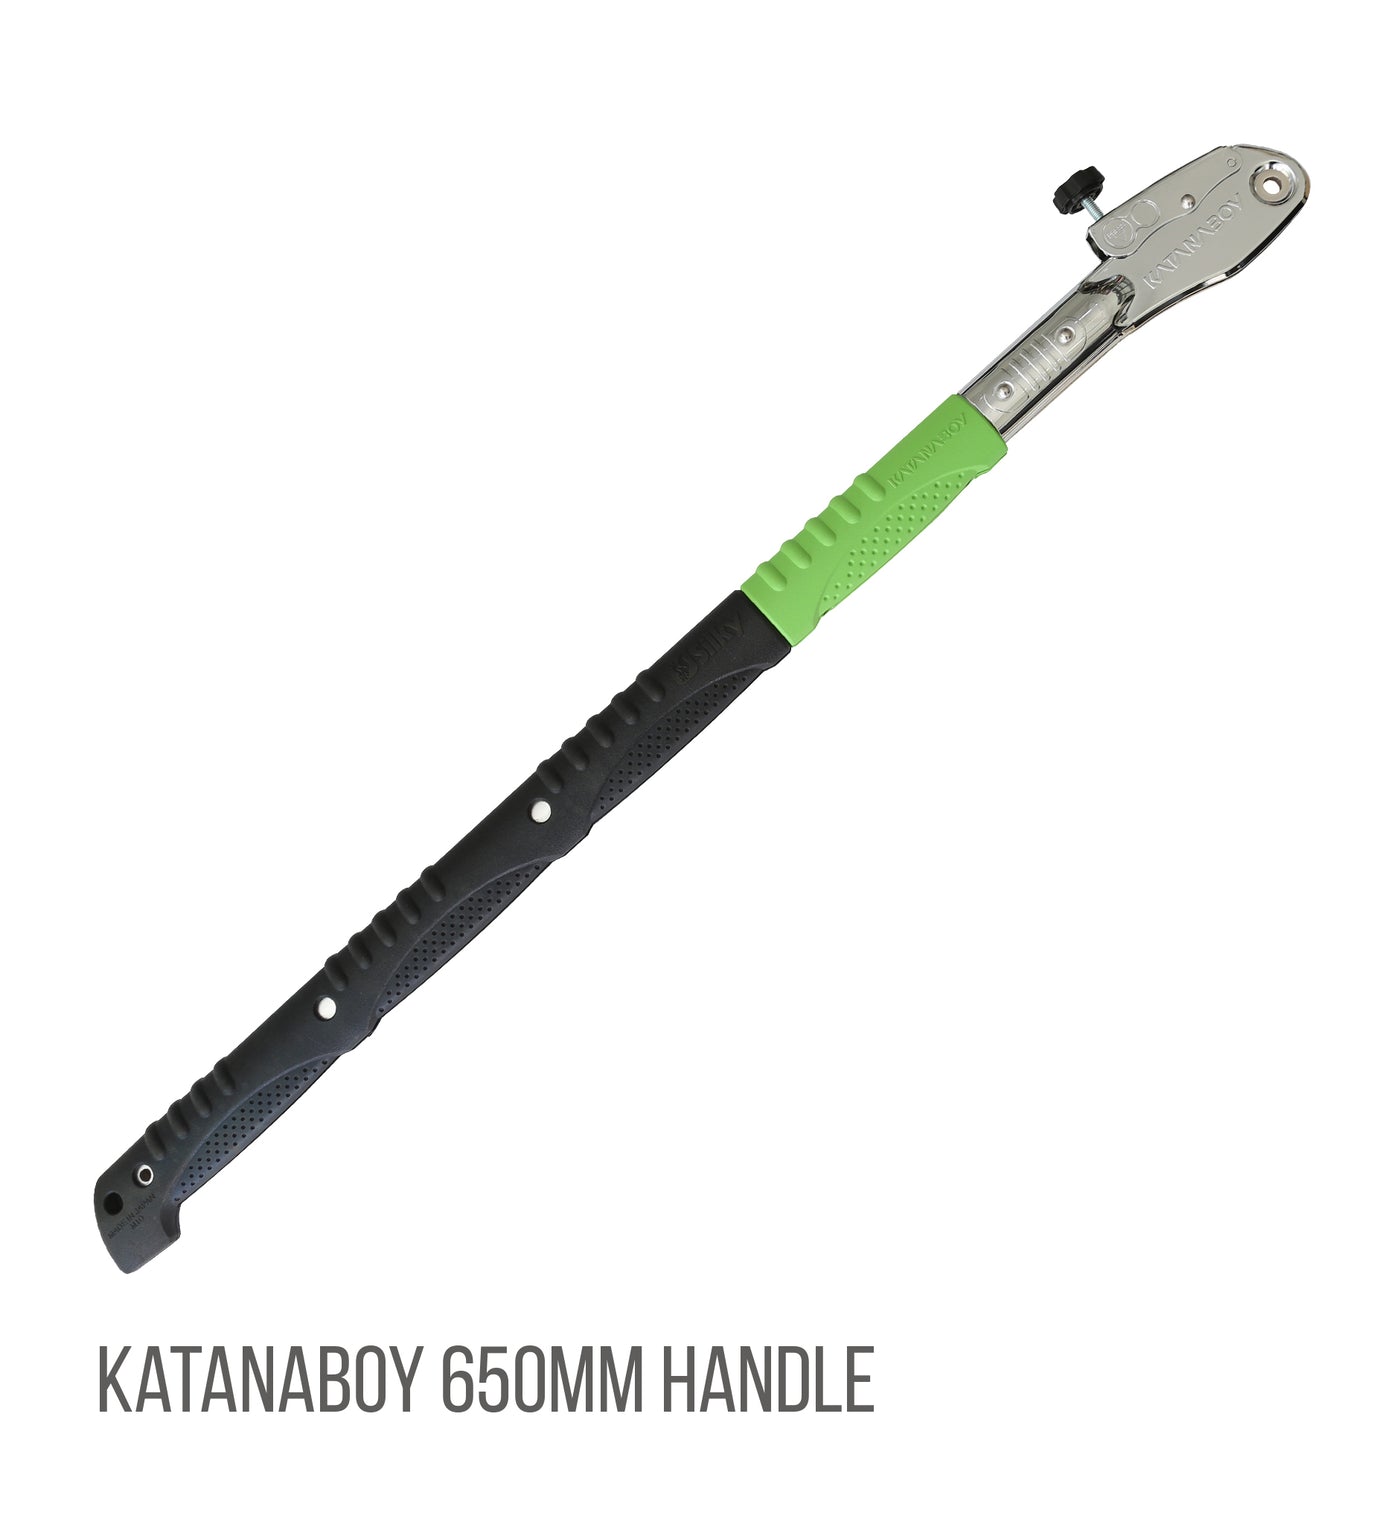 HAND GRIPS - Katanaboy